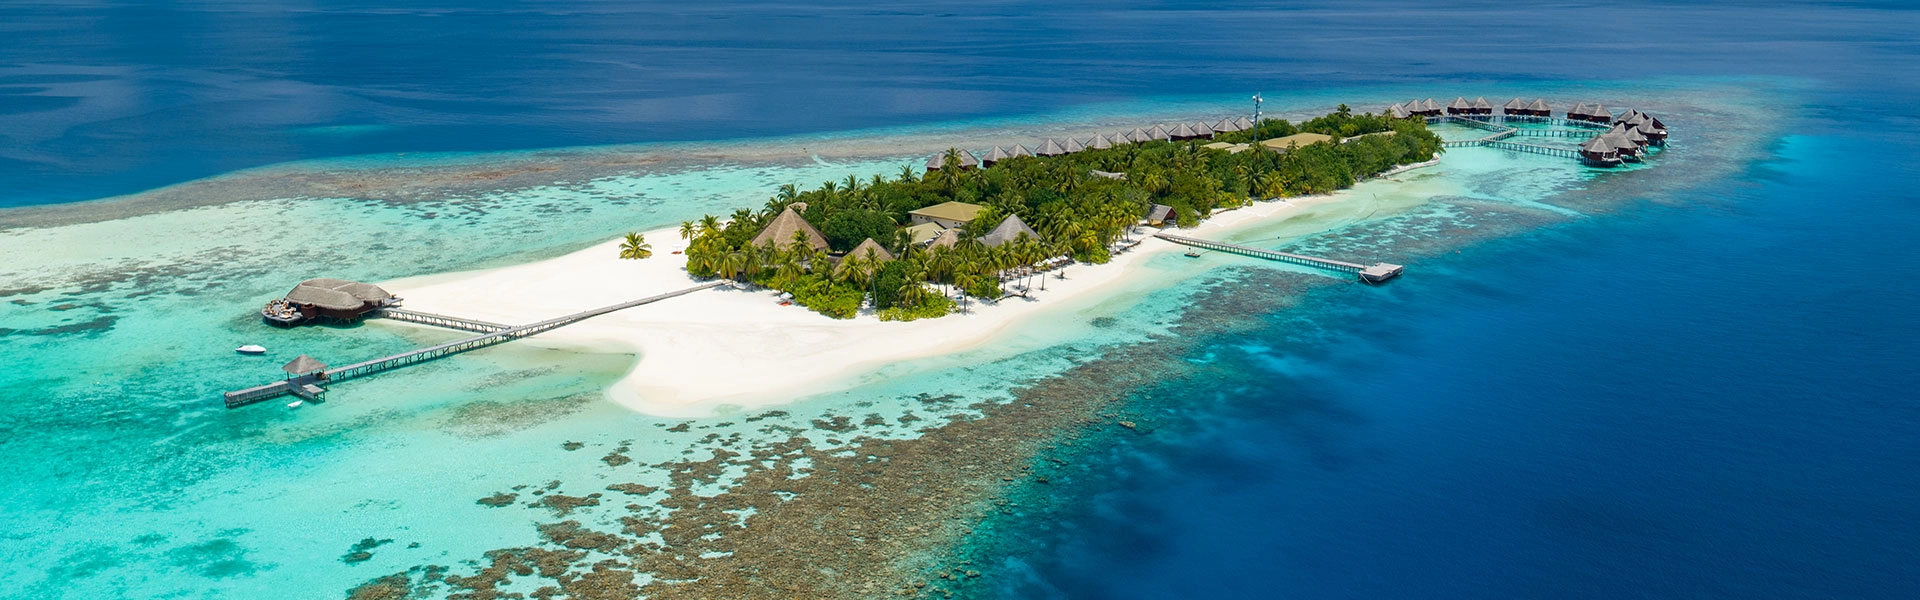  Mirihi Island  strand - Maldives